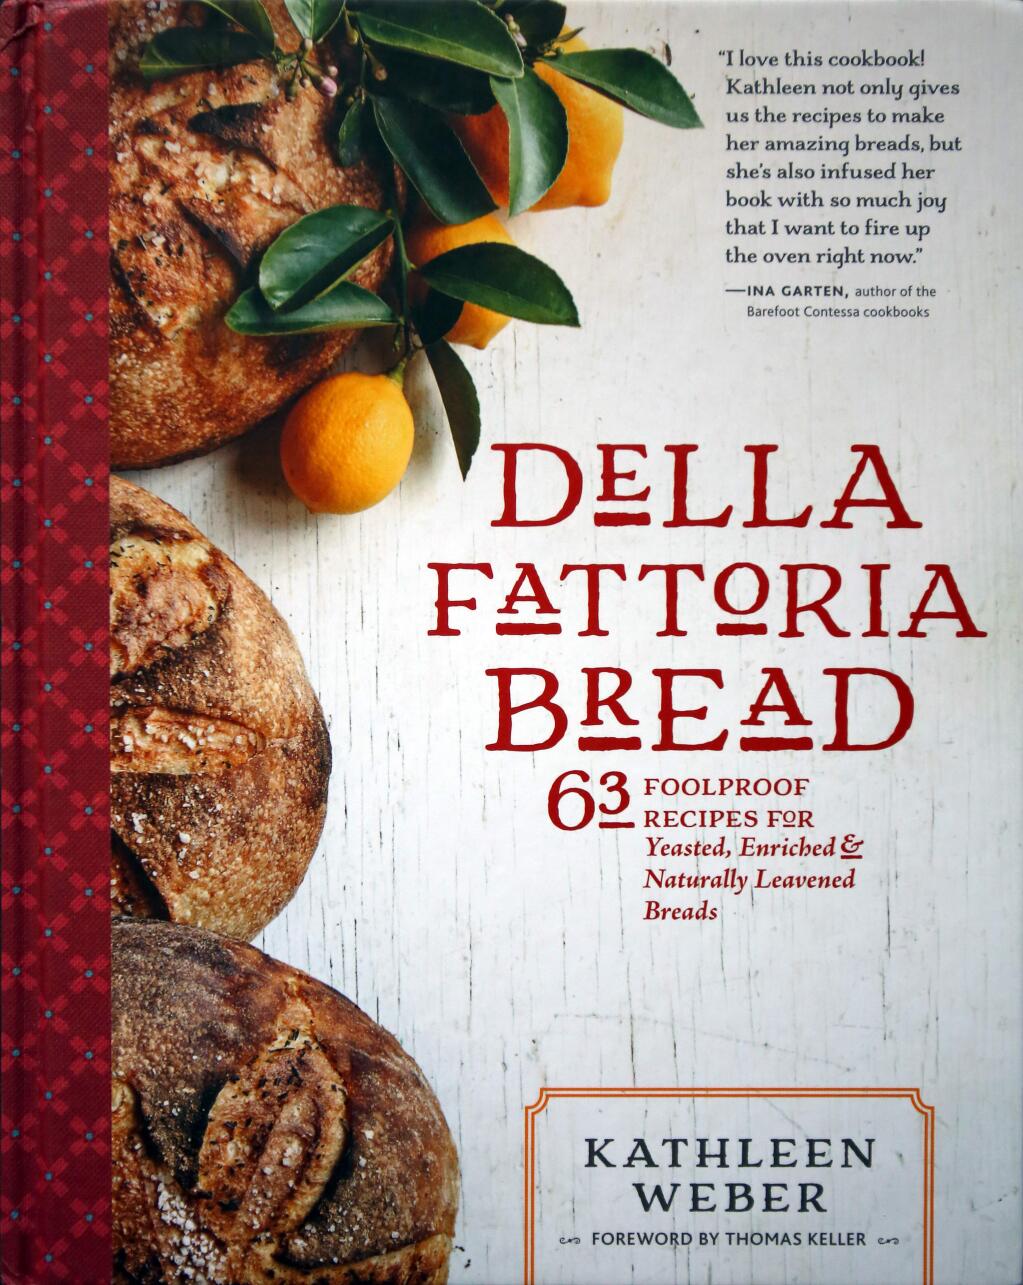 Amy Vogler was a co-writer on Kathleen Weber's Della Fattoria Bread cookbook. (Christopher Chung/ The Press Democrat)